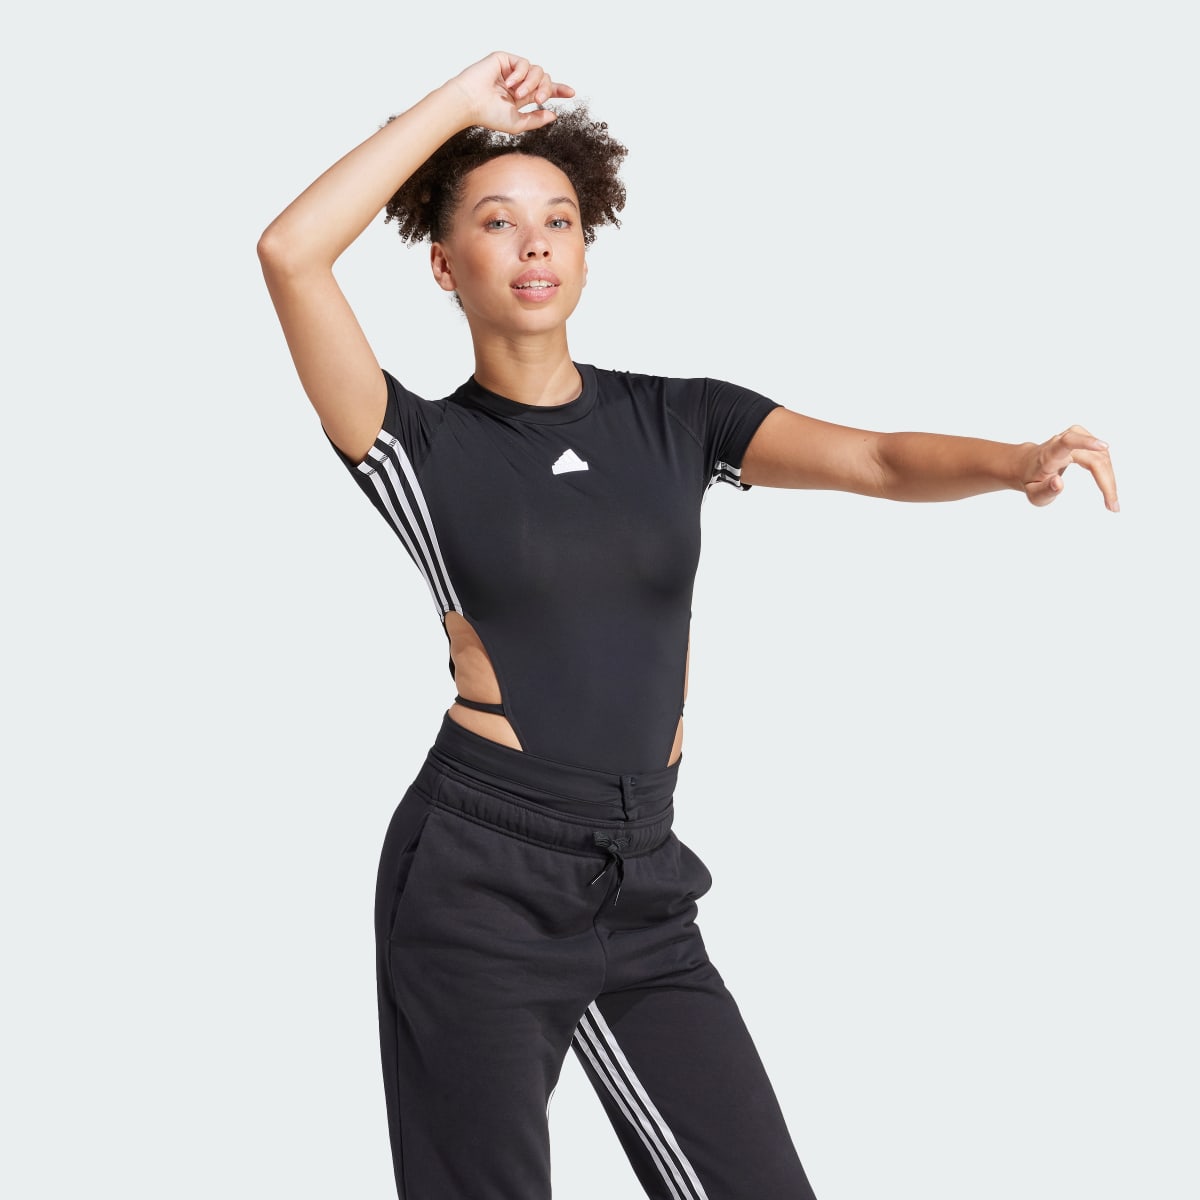 Adidas Dance All-Gender Bodysuit. 4